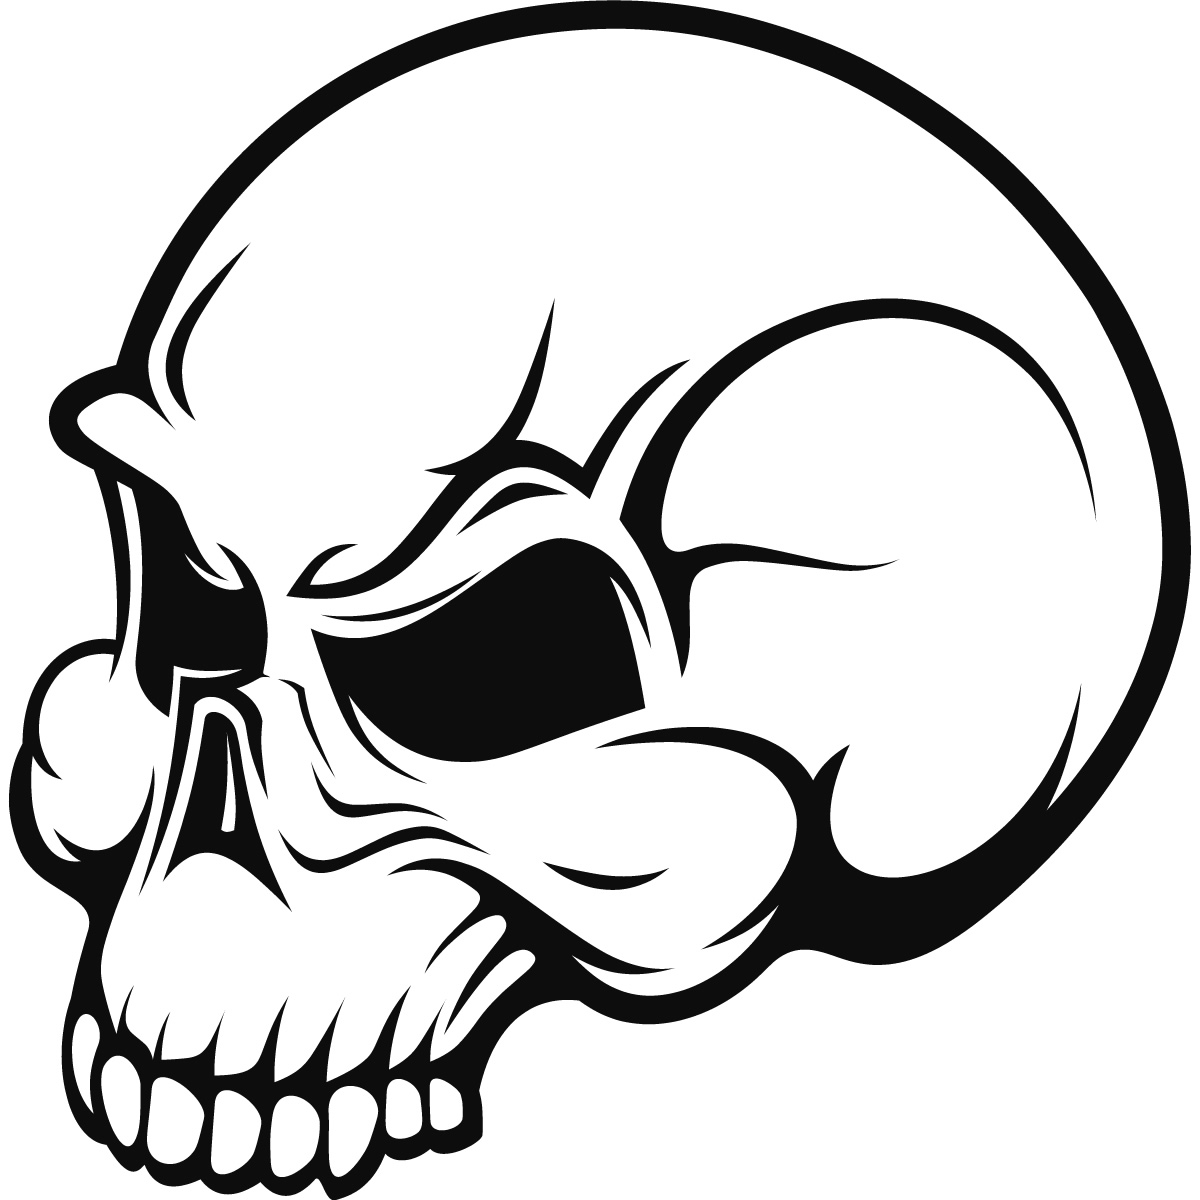 Skull Line Drawing - ClipArt Best